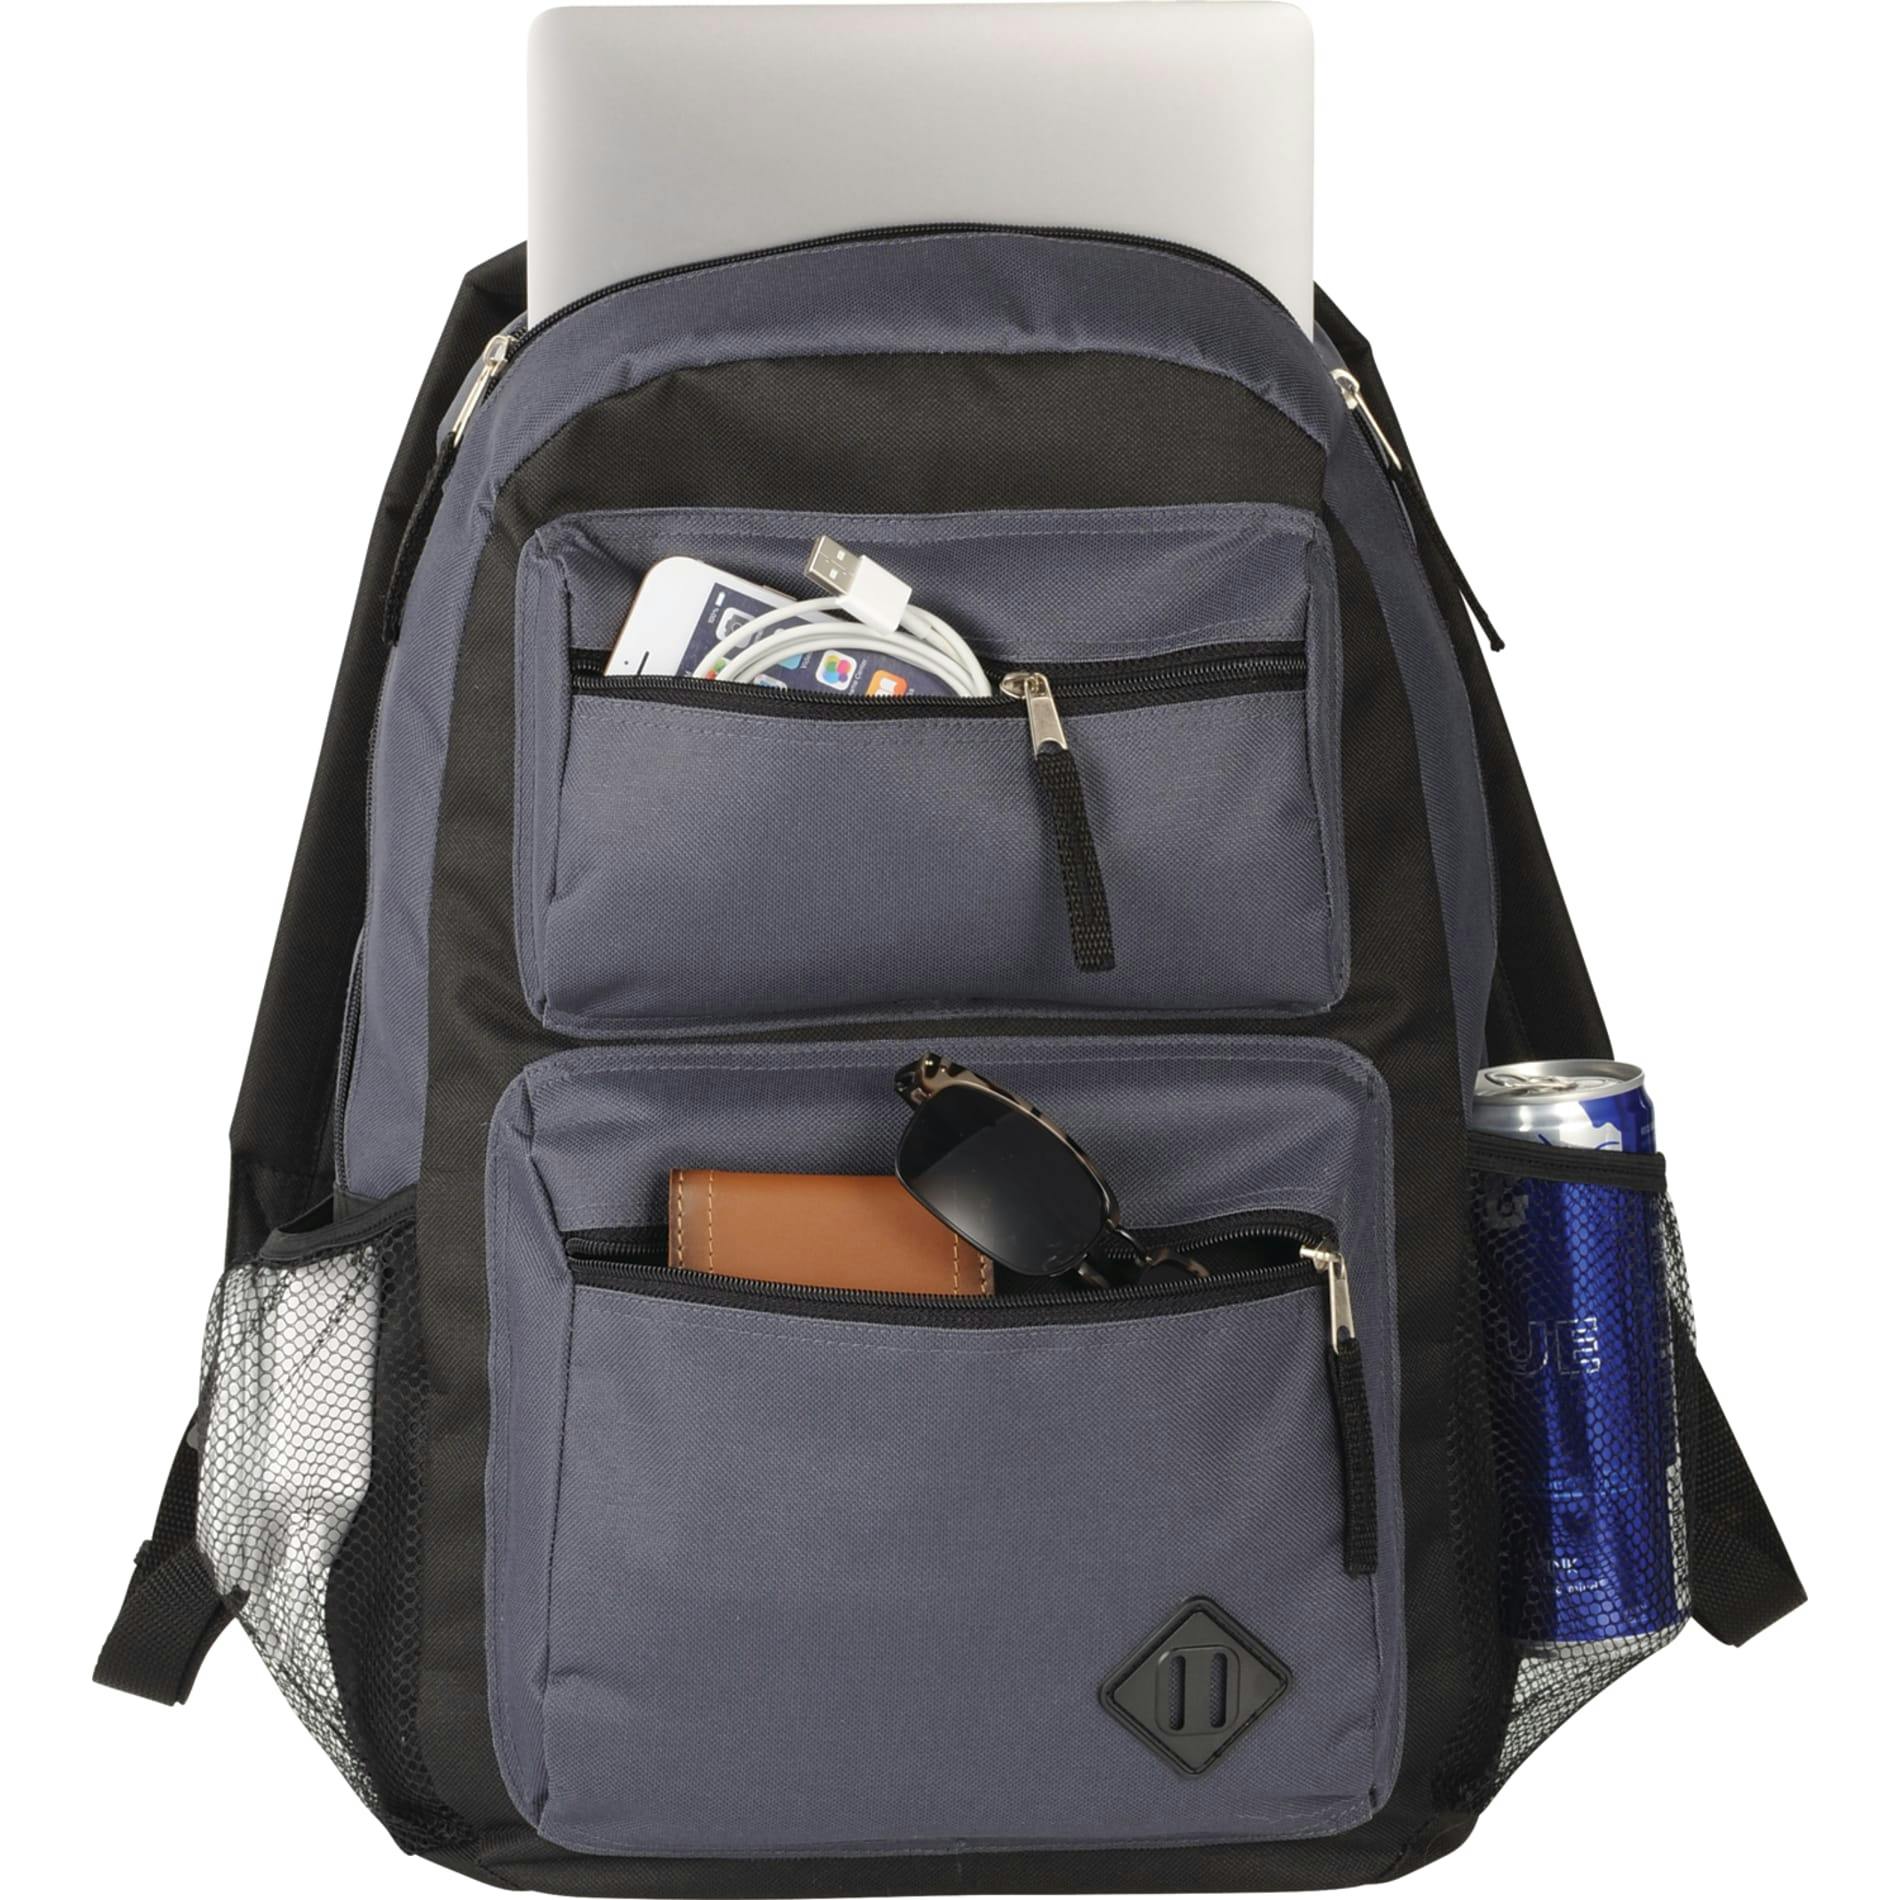 Double Pocket Backpack - additional Image 1